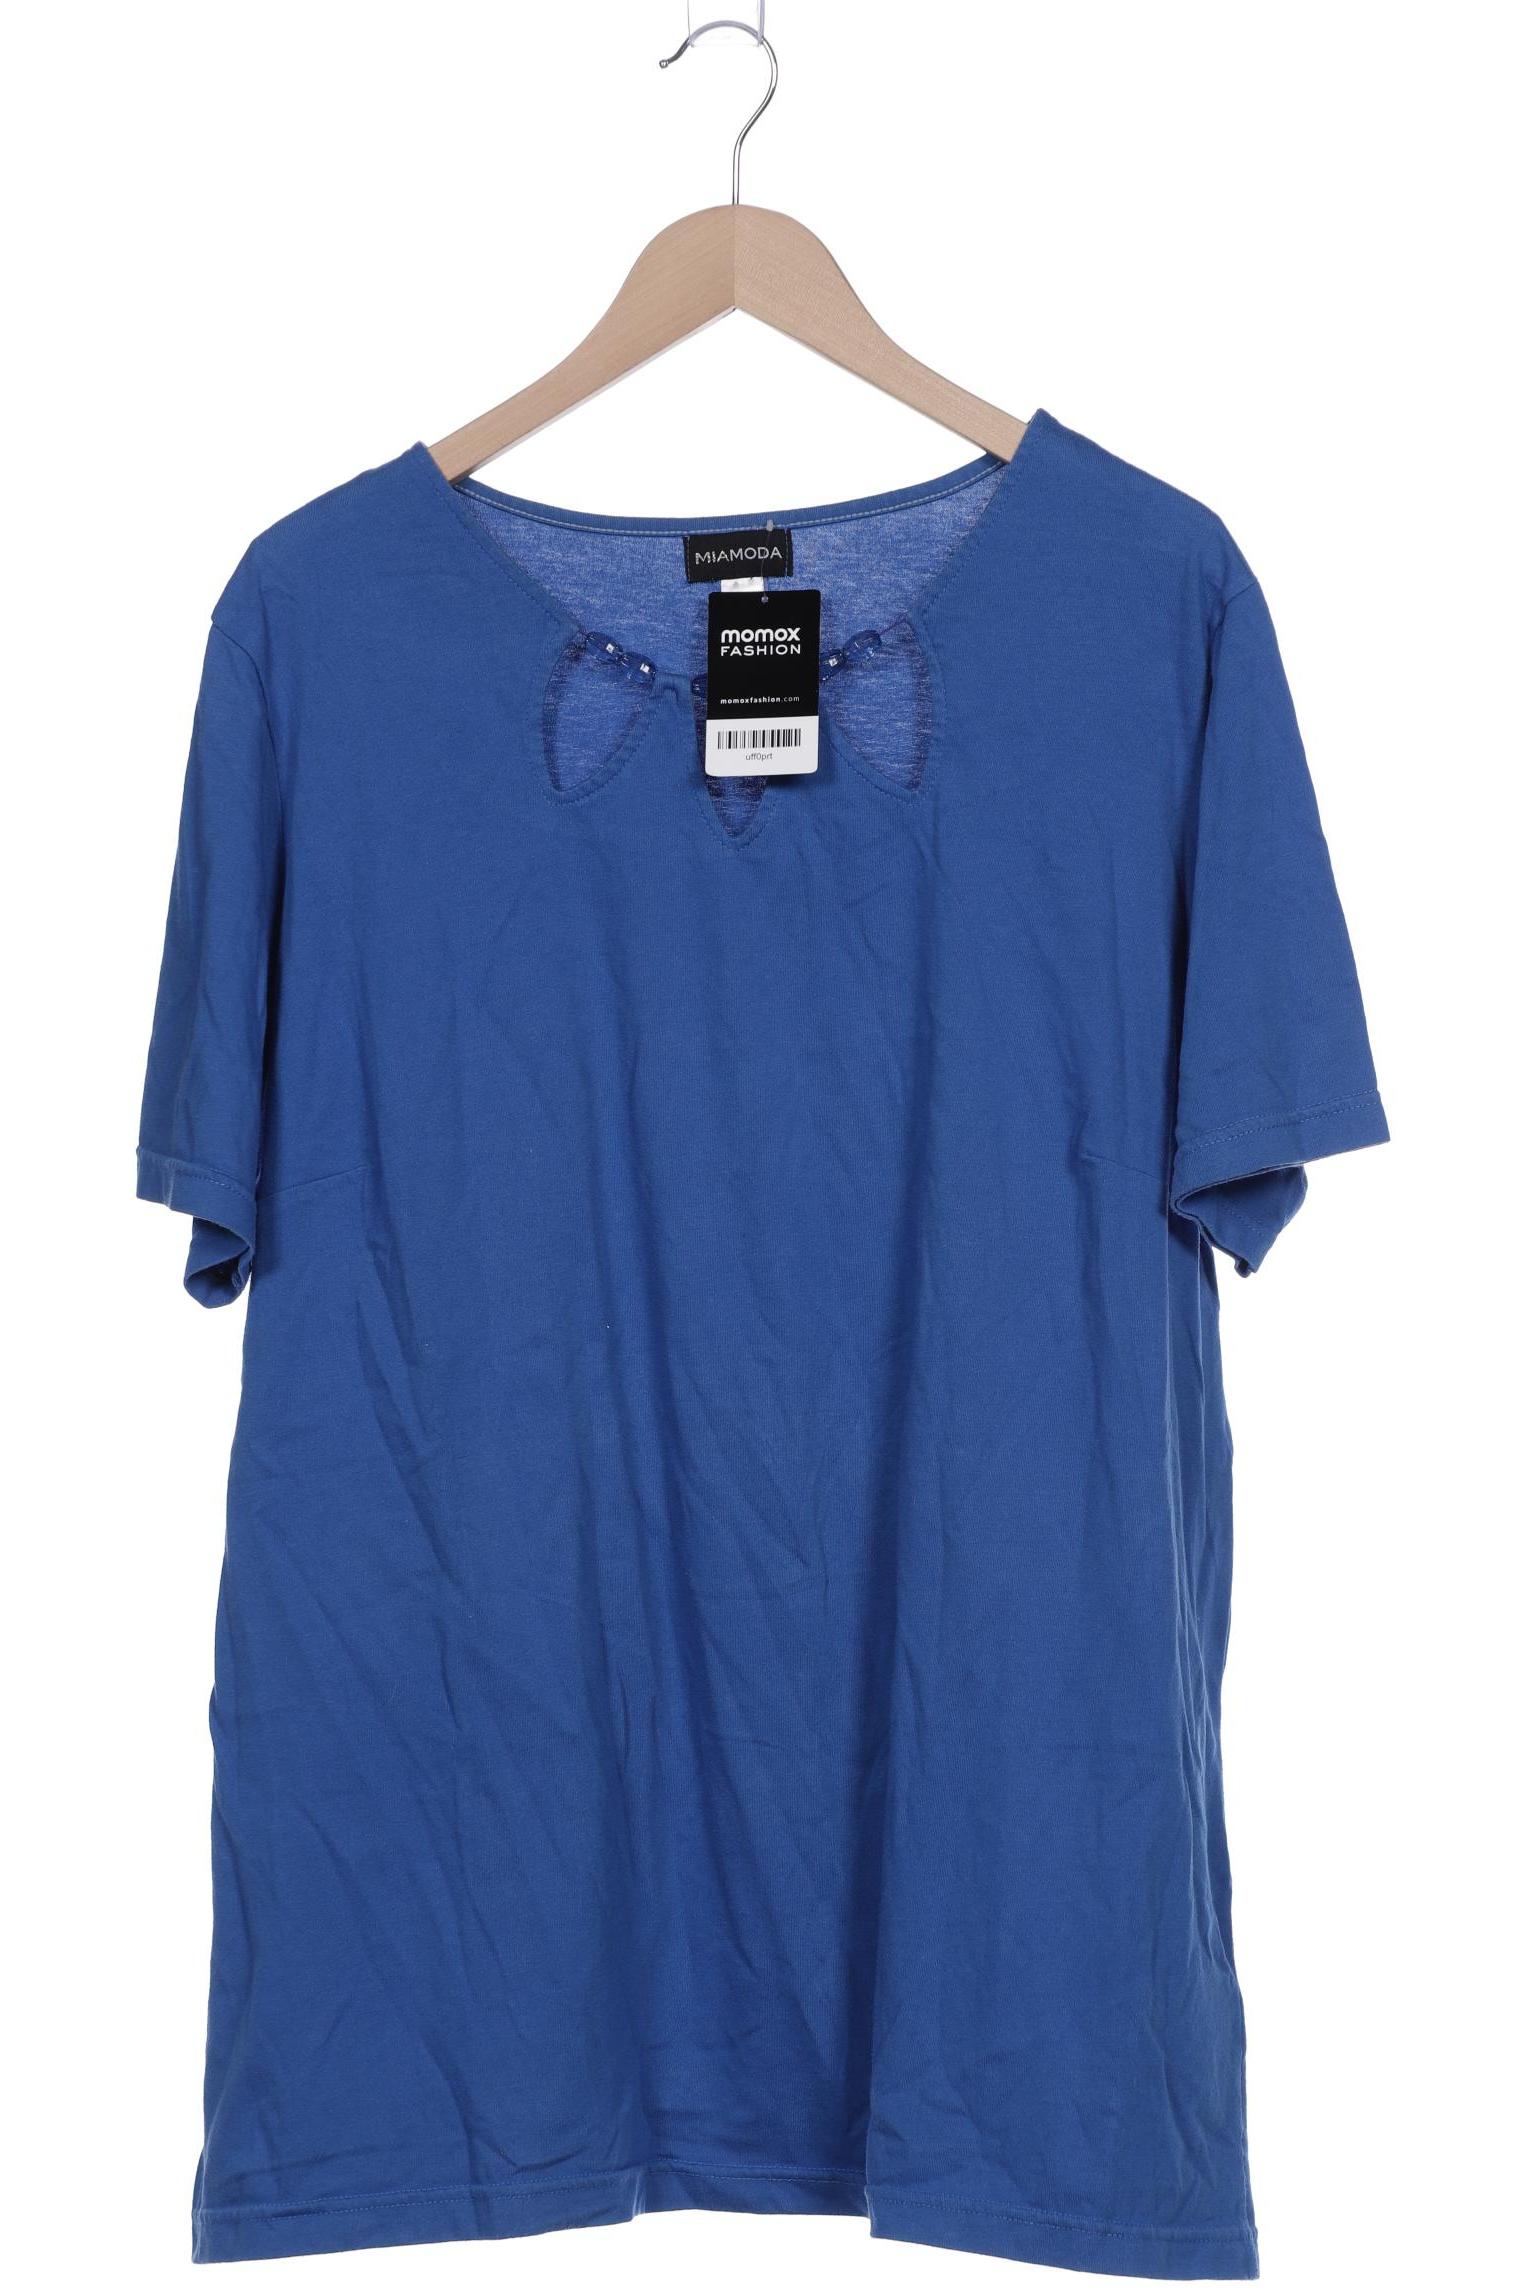 MIAMODA Damen T-Shirt, blau von MIAMODA